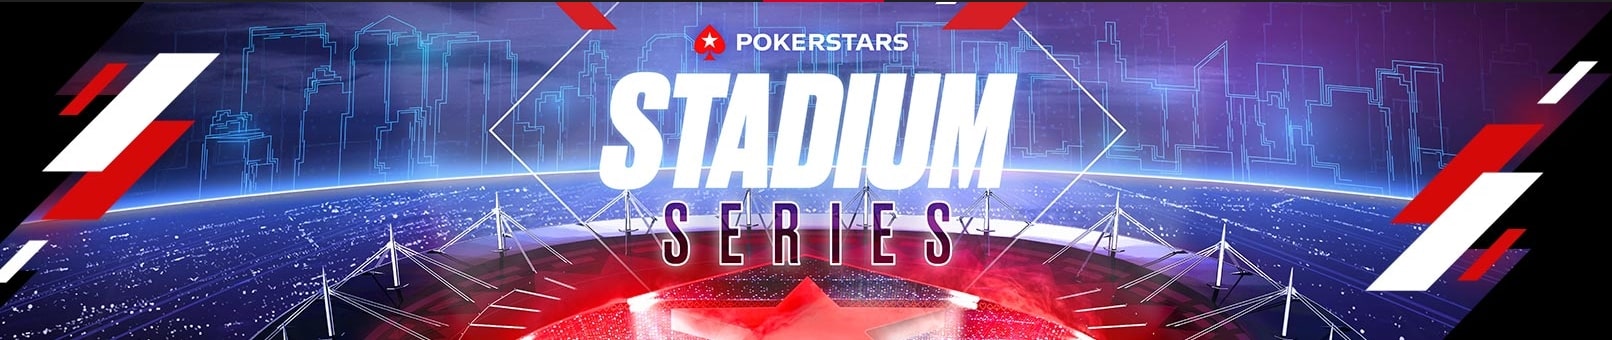 50M$ в Stadium Series на Pokerstars уже в июле!